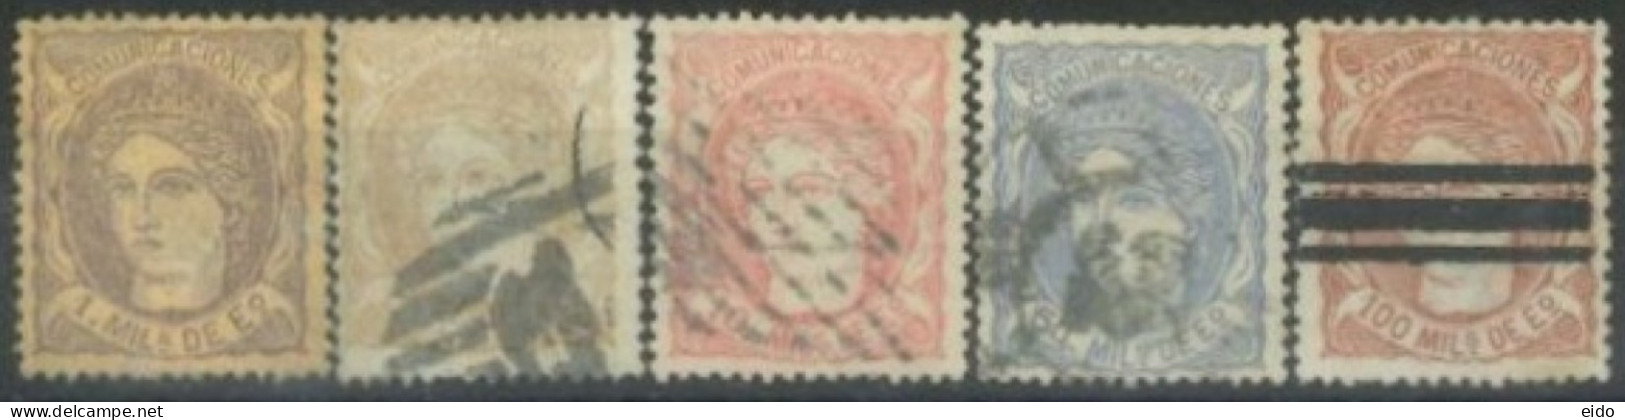 SPAIN,  1870 - ESPANA STAMPS SET OF 5, # 159, 163/64, & 166/67,USED. - Usati